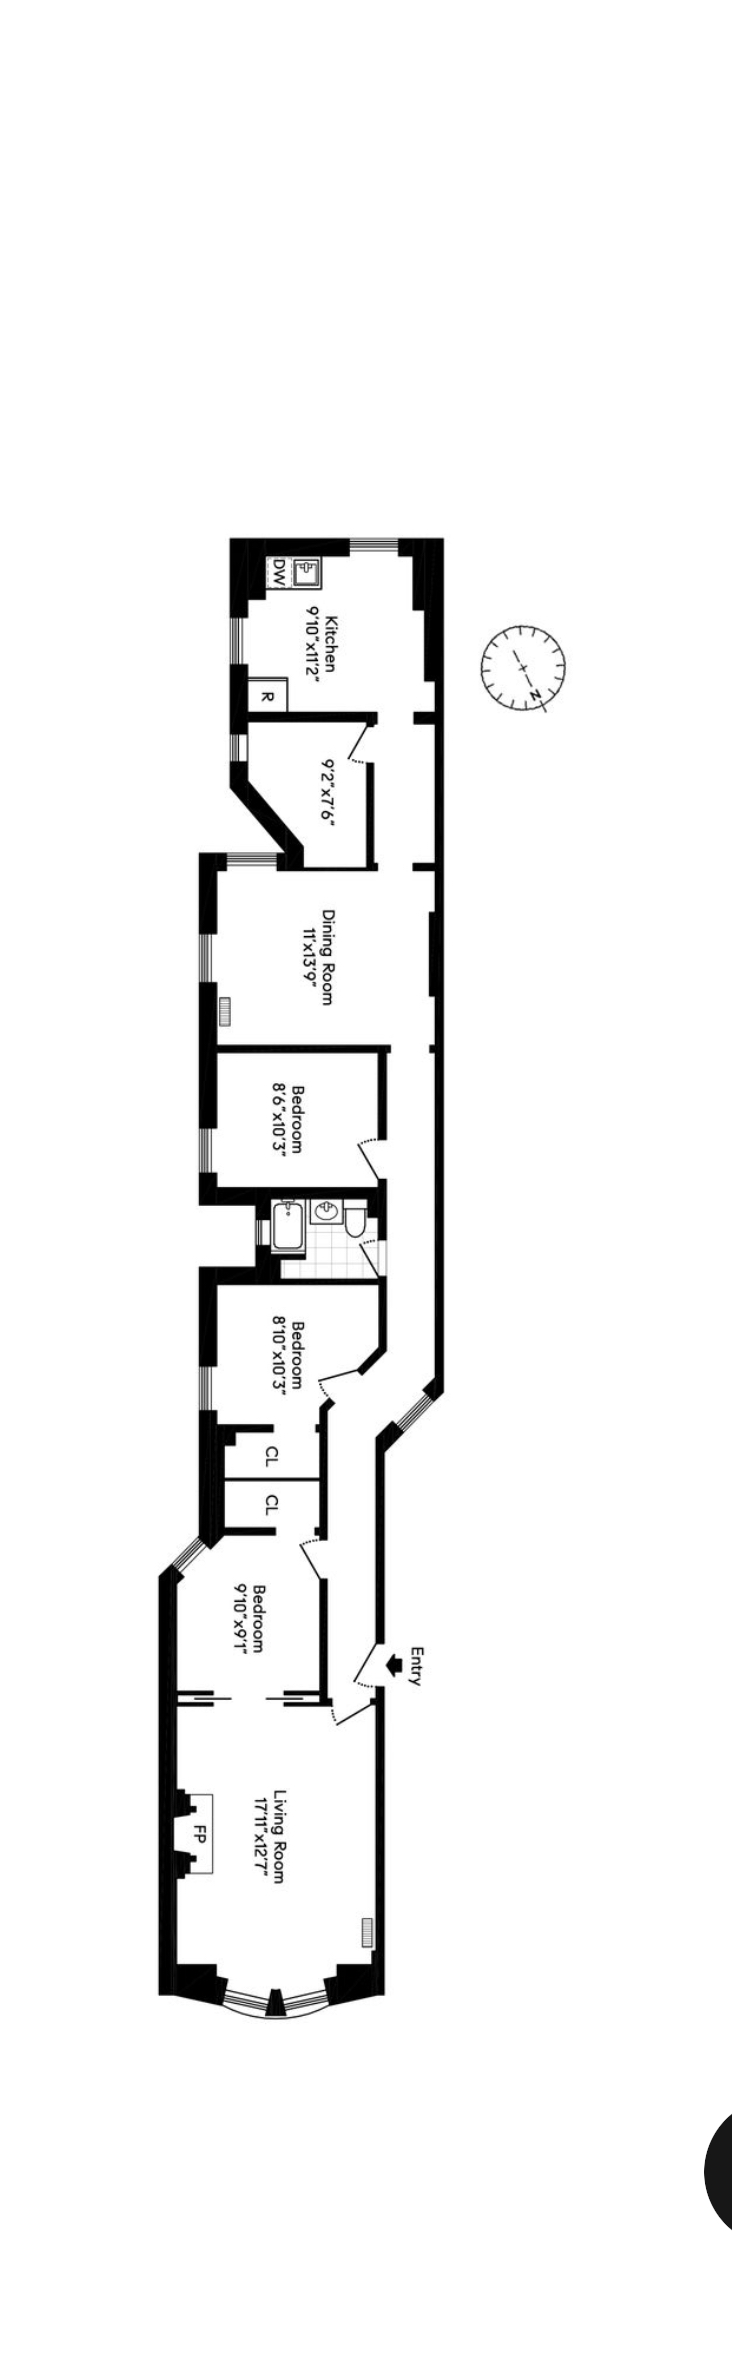 Floorplan for 202 West 78th Street, 2E